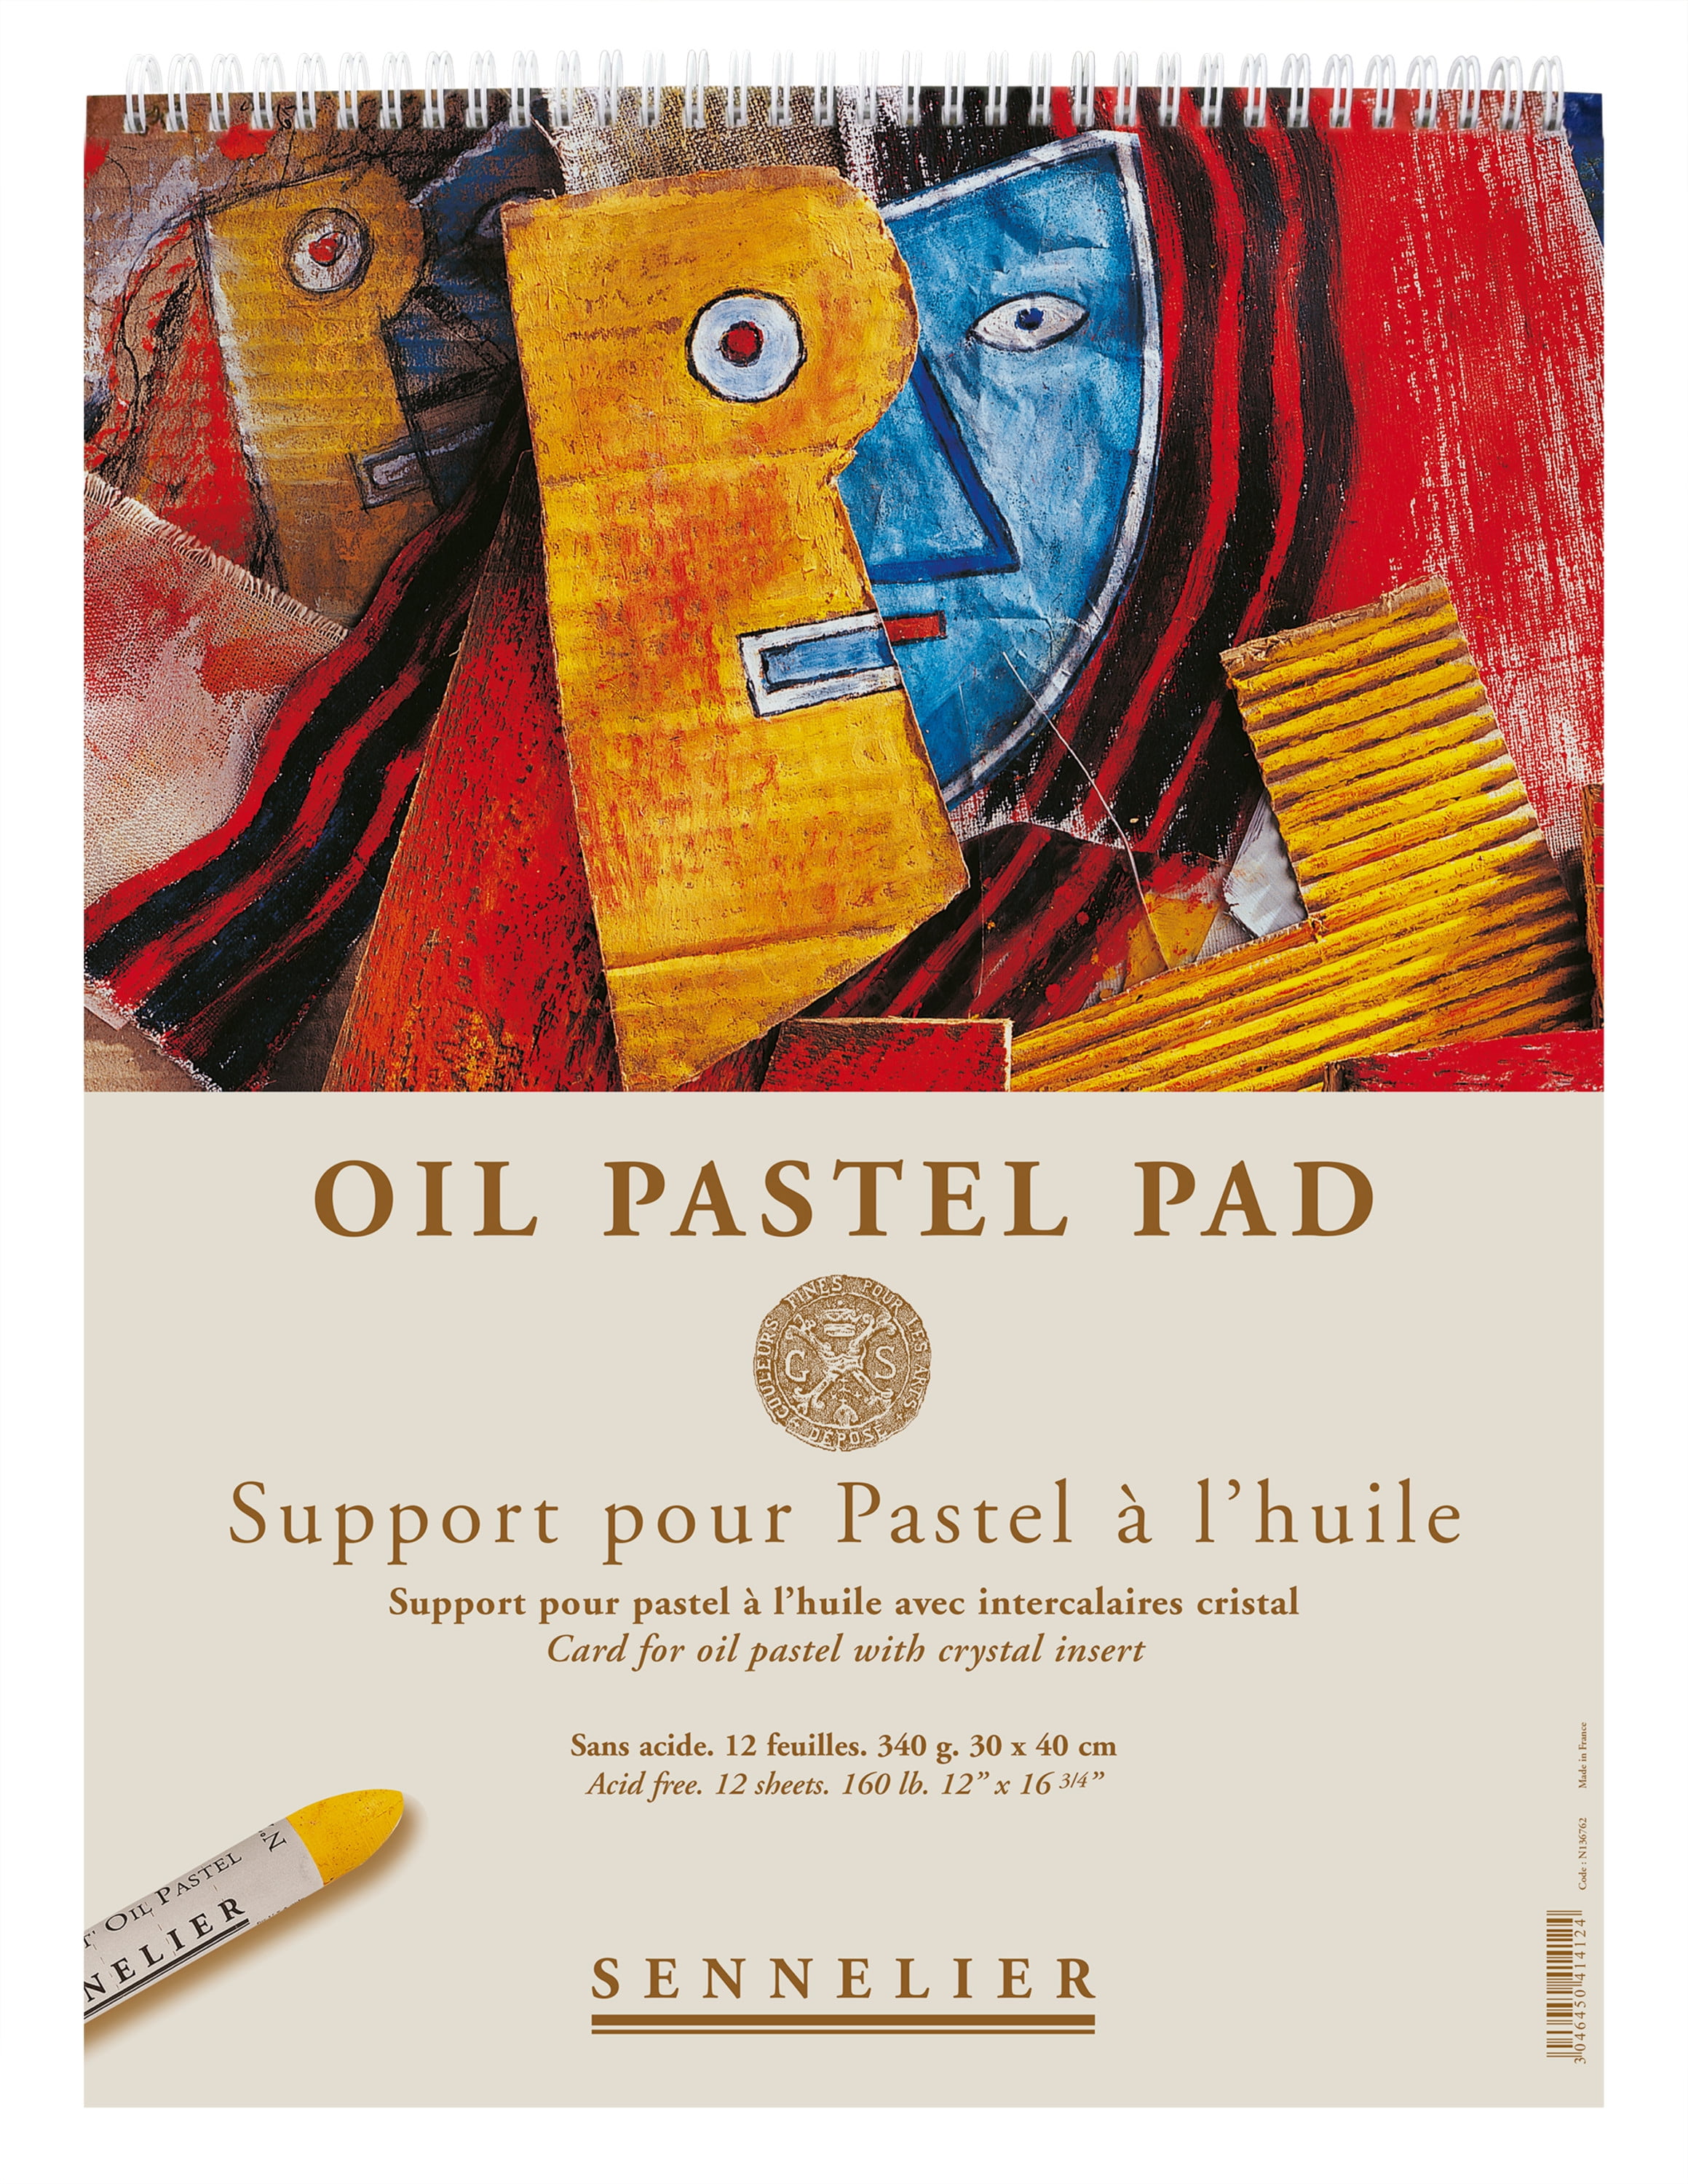 Sennelier Pastels Oil 24 Colors MADE IN FRANCE France Import